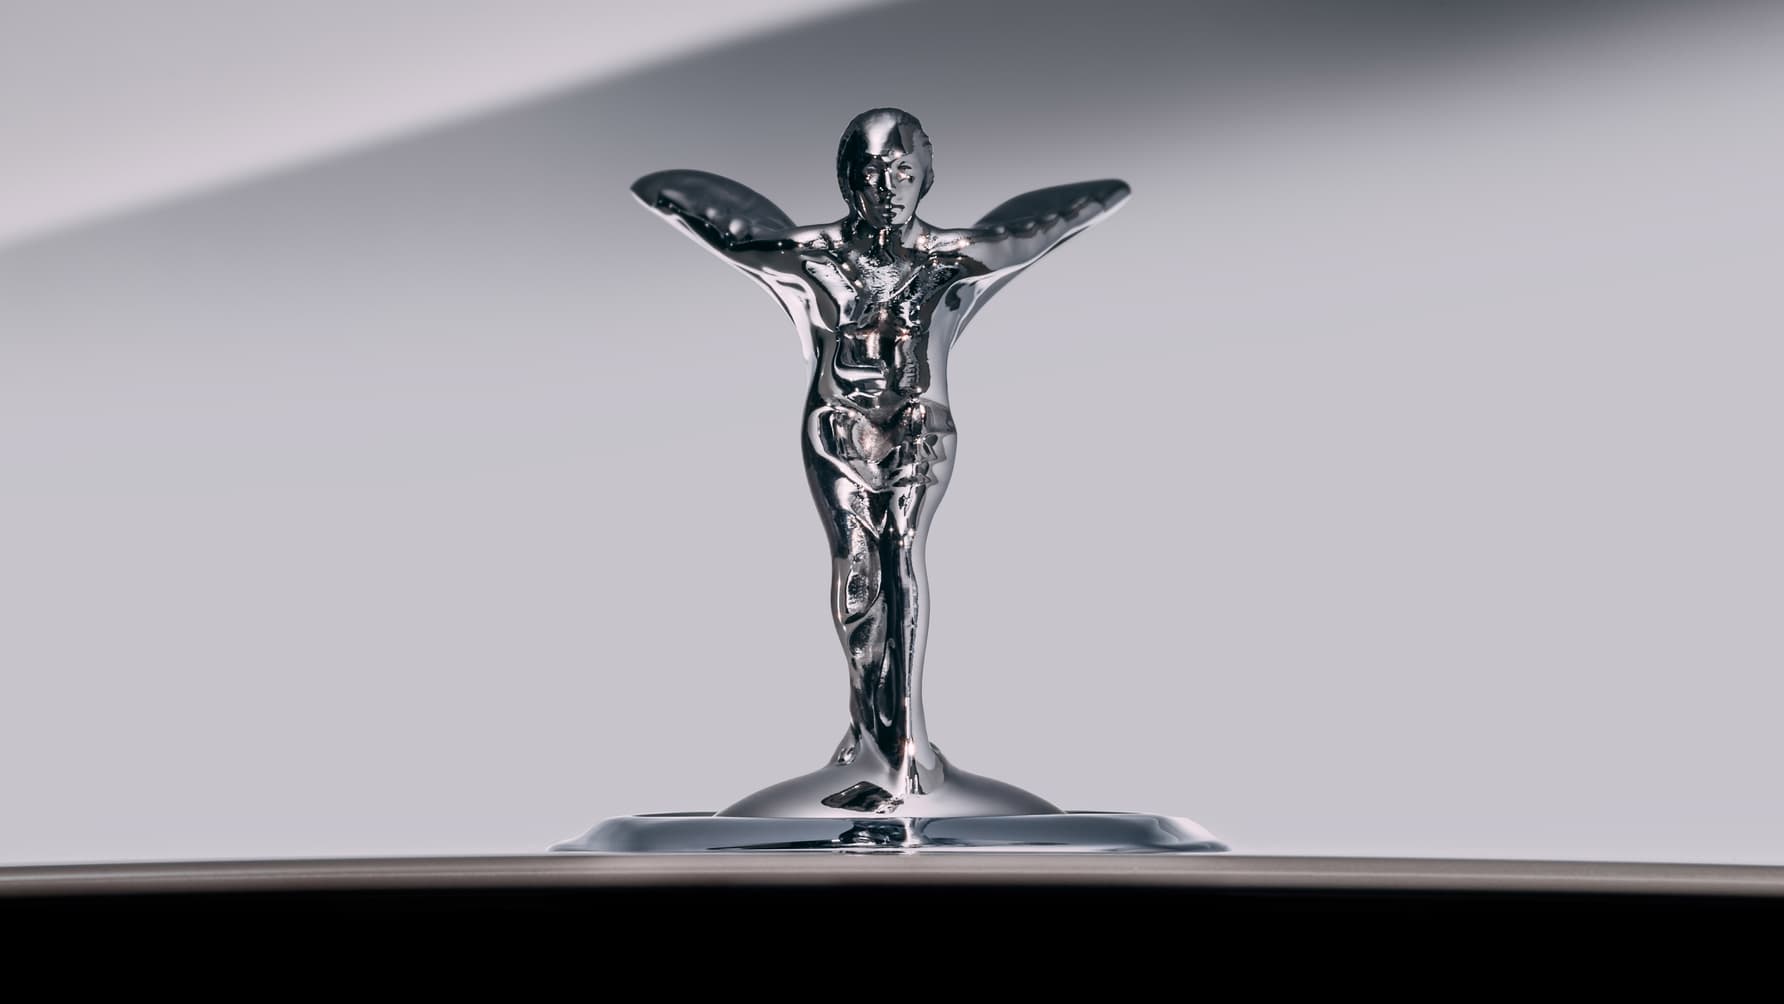 Rolls-Royce shows off its new Spirit of Ecstasy figurine